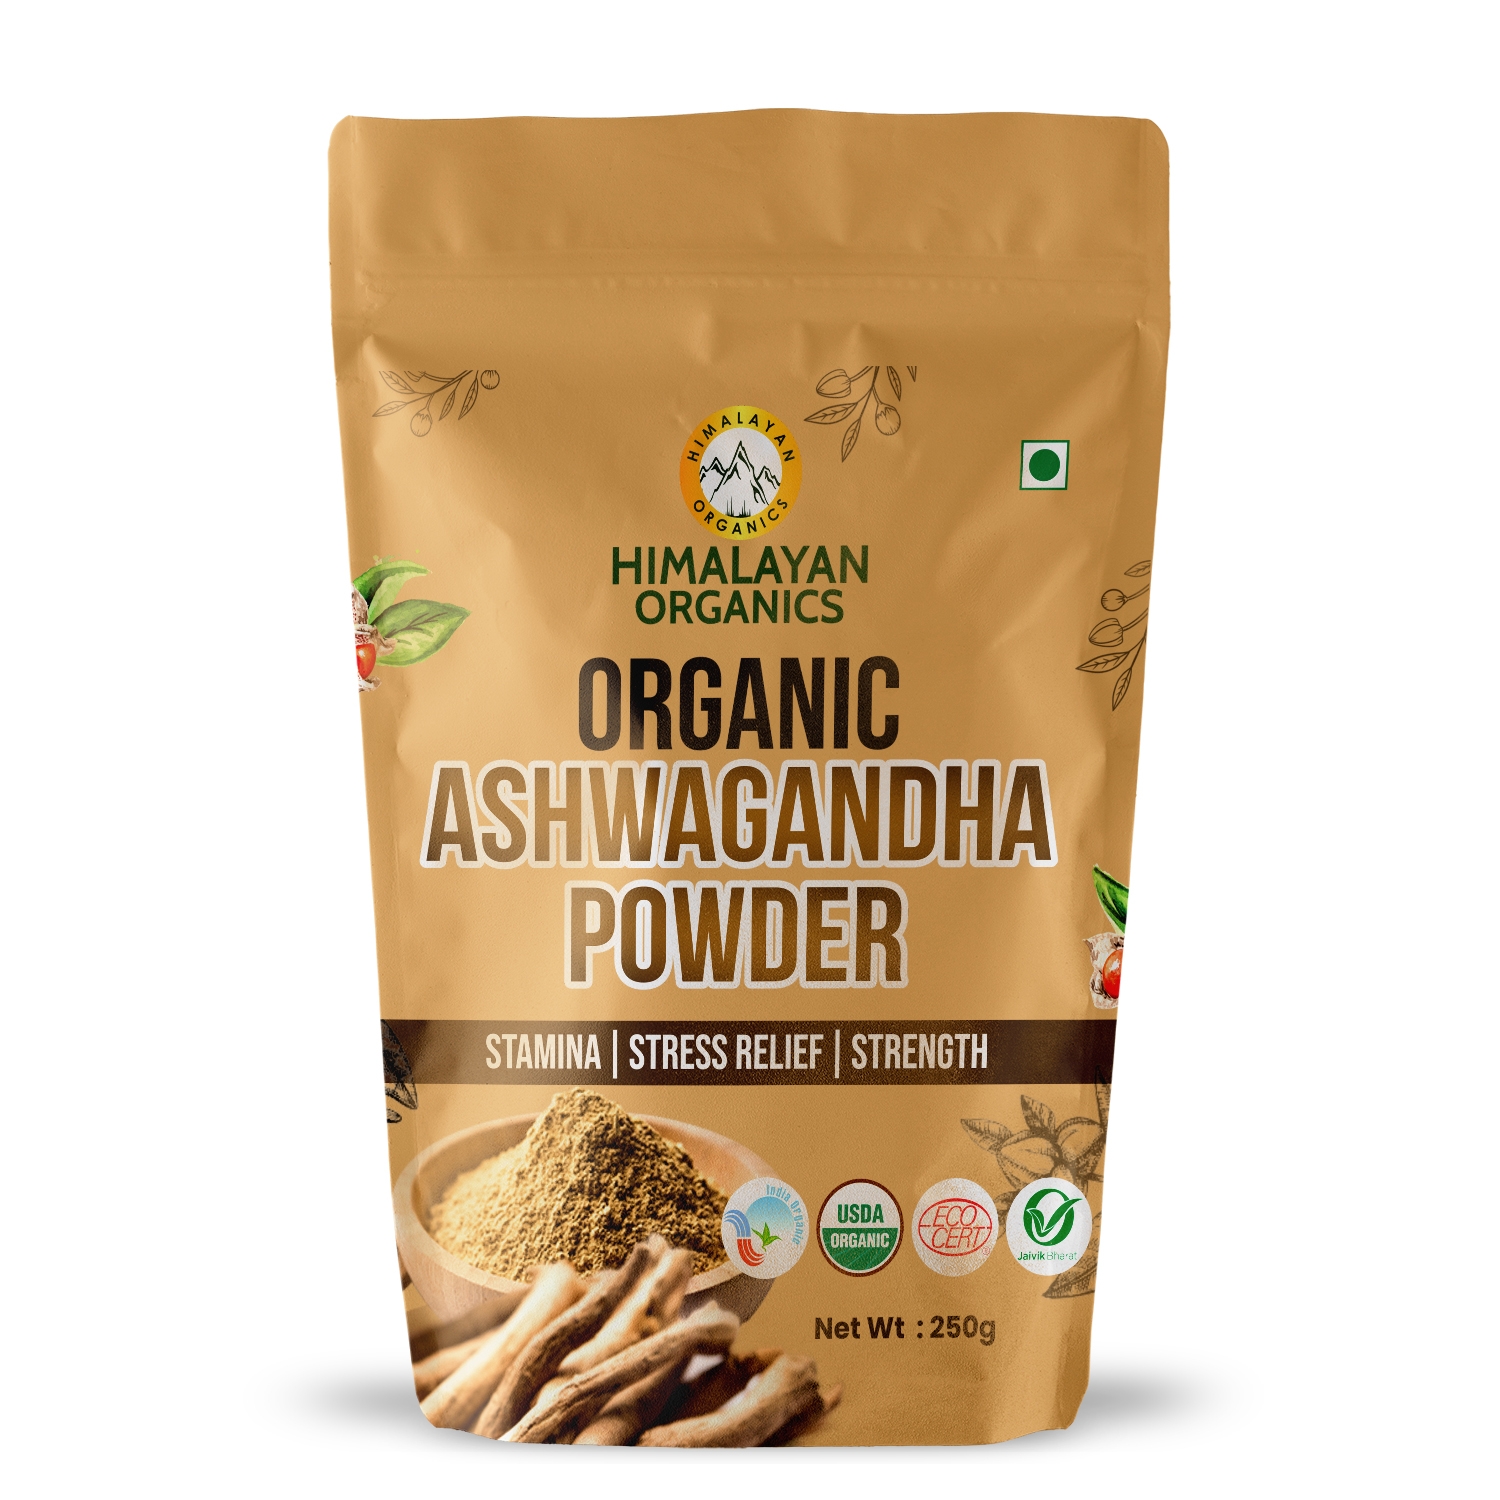 Himalayan Organics | Himalayan Organics Certified Organic Ashwagandha Powder Withania Somnifera Supplement - Promotes Better Strength & Stamina